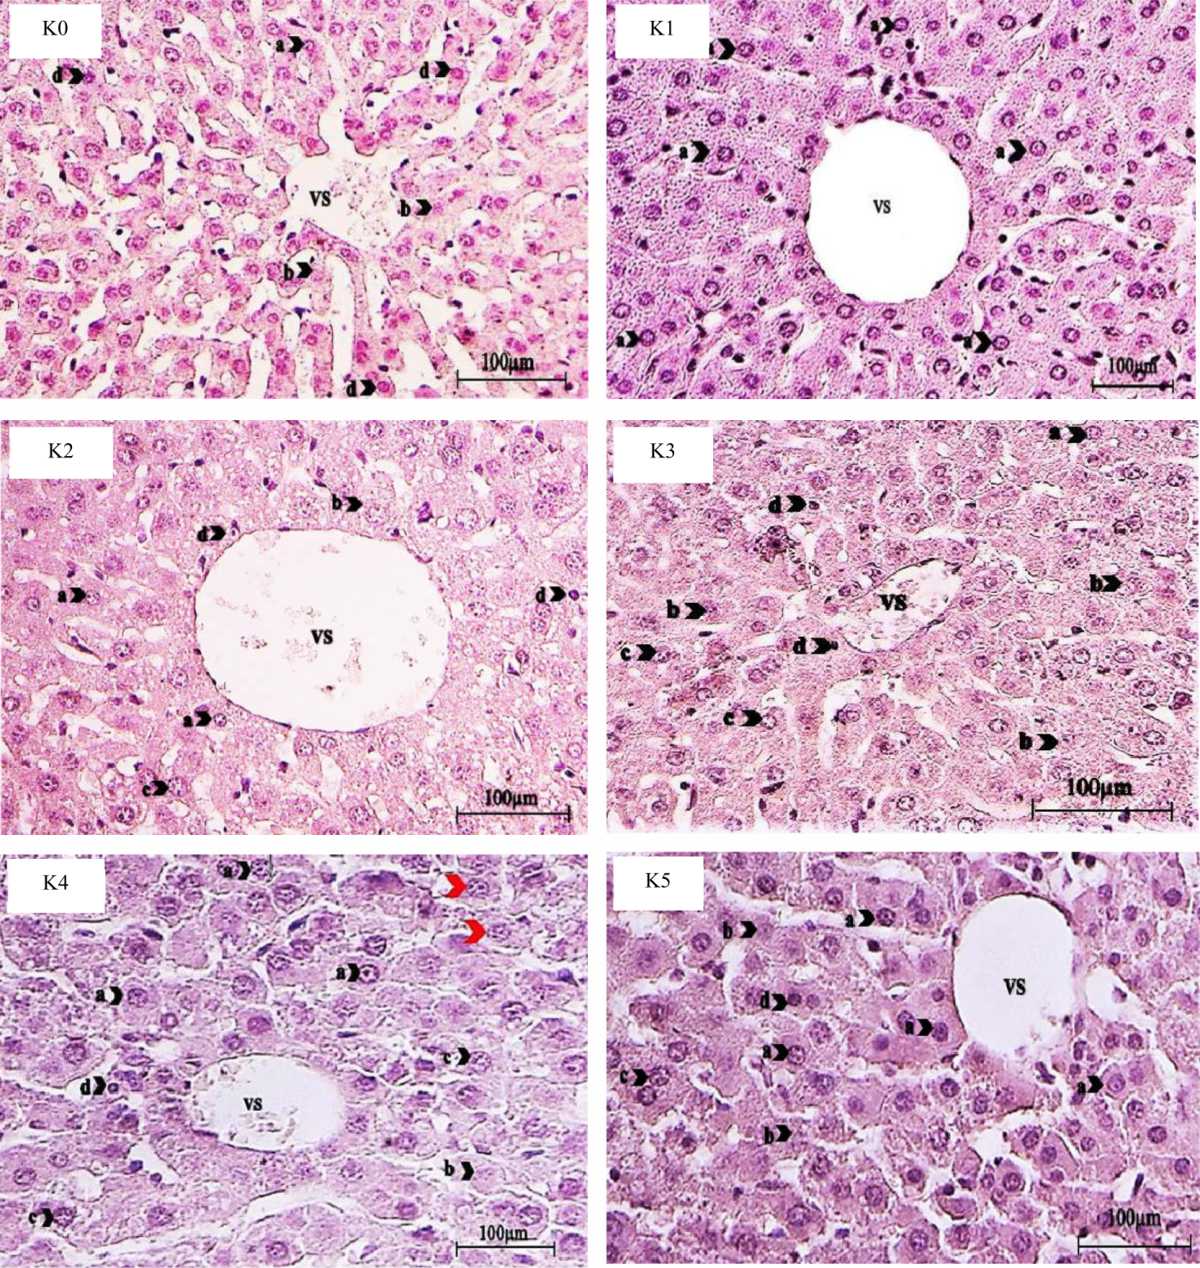 Image for - Effect of Merbau Wood Liquid Smoke (Intsia bijuga) in Correct Liver Cell Regeneration Mice (Mus musculus) Exposed to Boraks